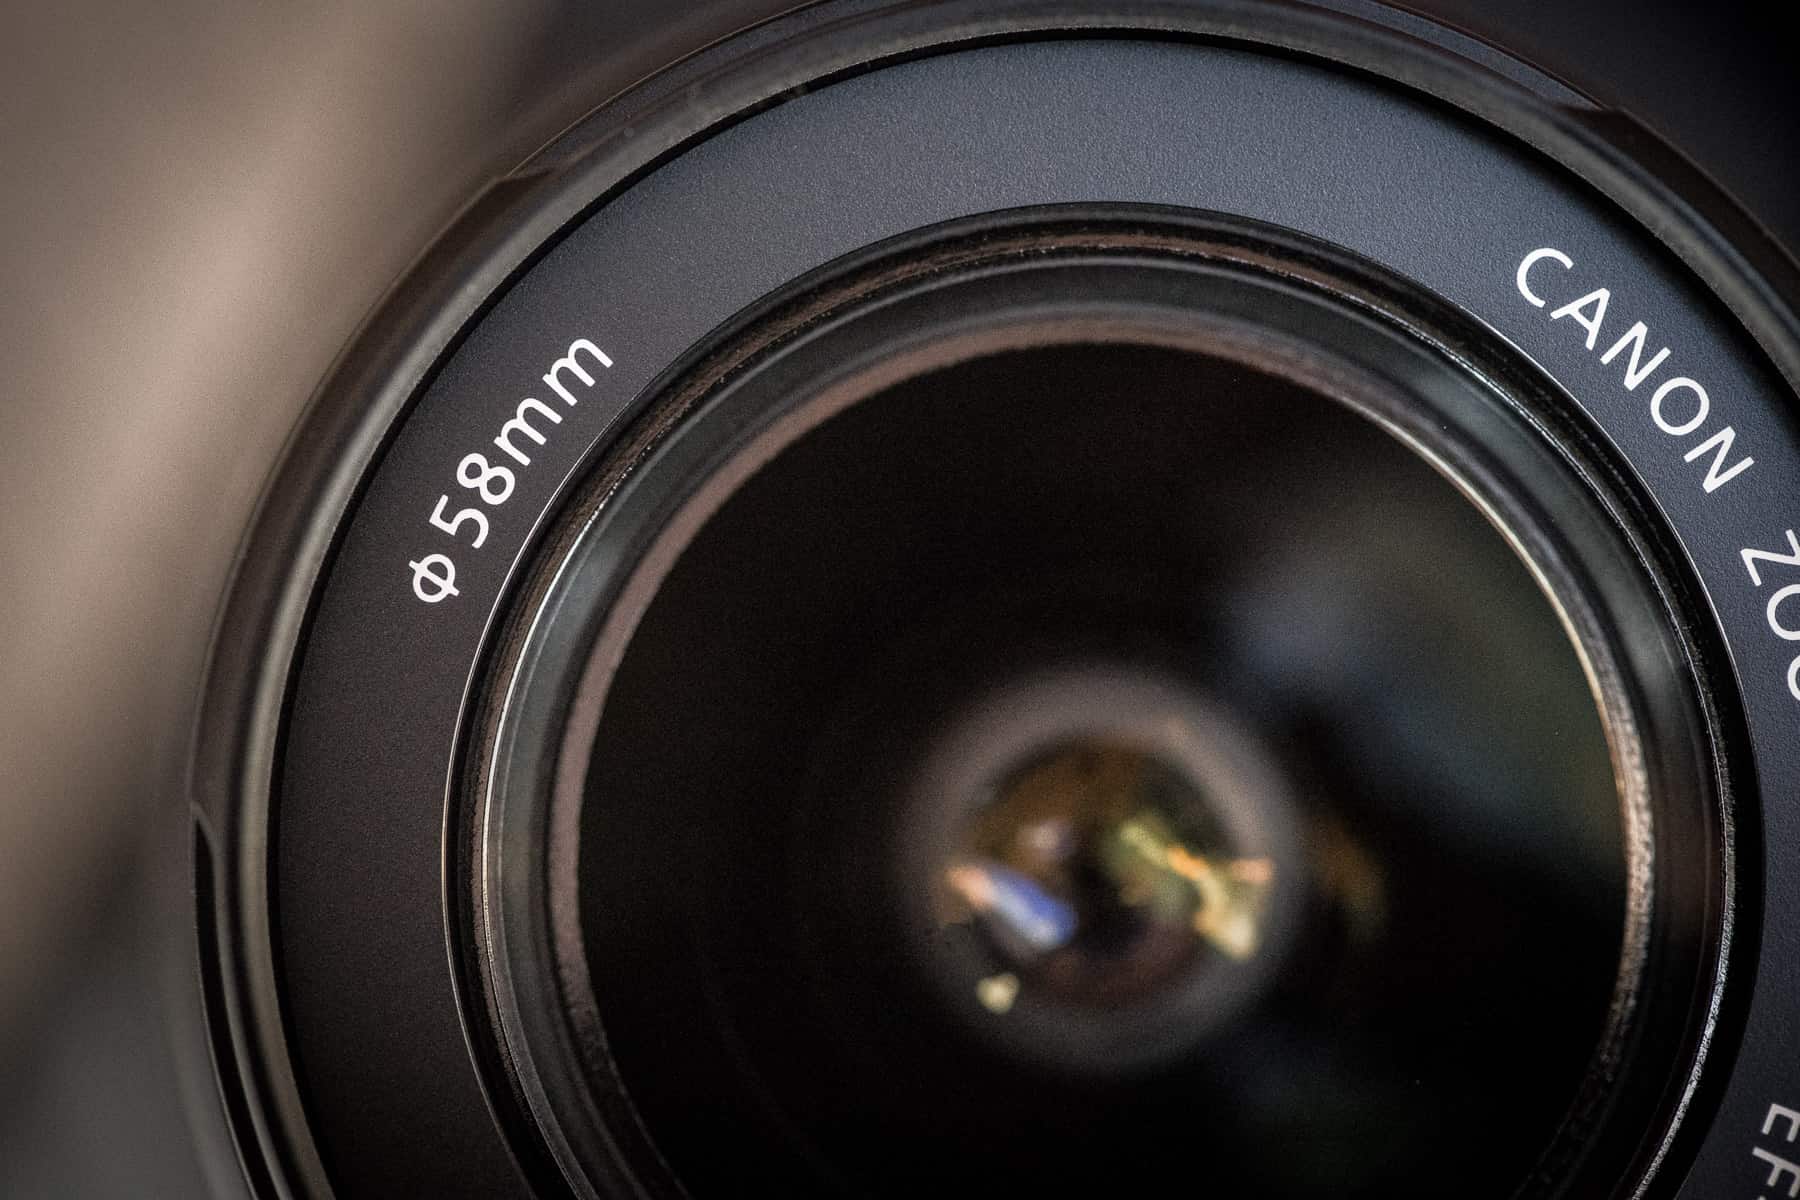 77mm Variable Neutral Density Filter for Canon TS-E 90mm f/2.8L Lens